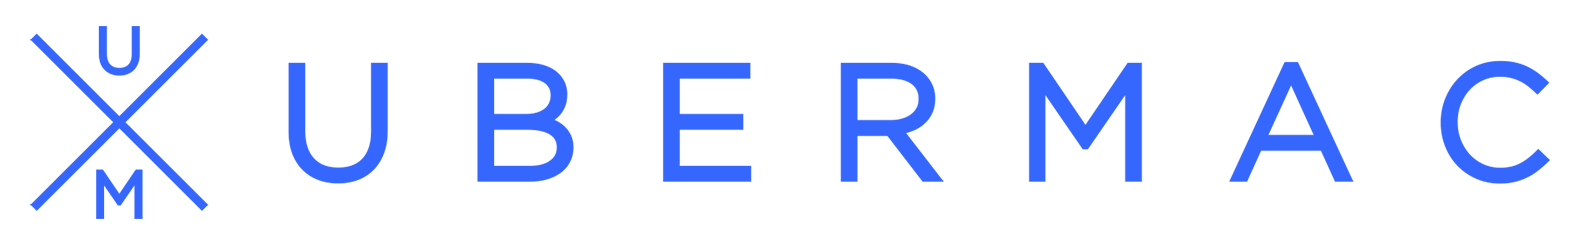 Ubermac Surf Logo Side By Side Blue